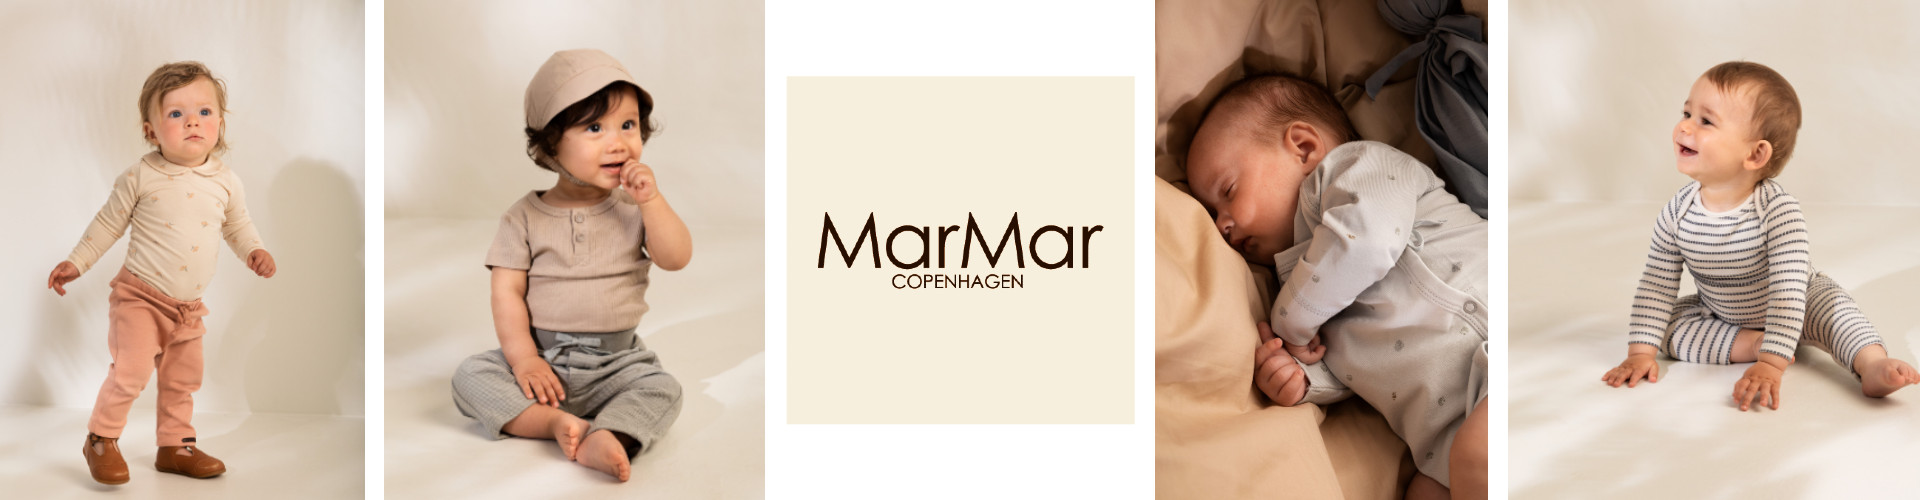  MarMar størrelsesguide til nyfødt og baby